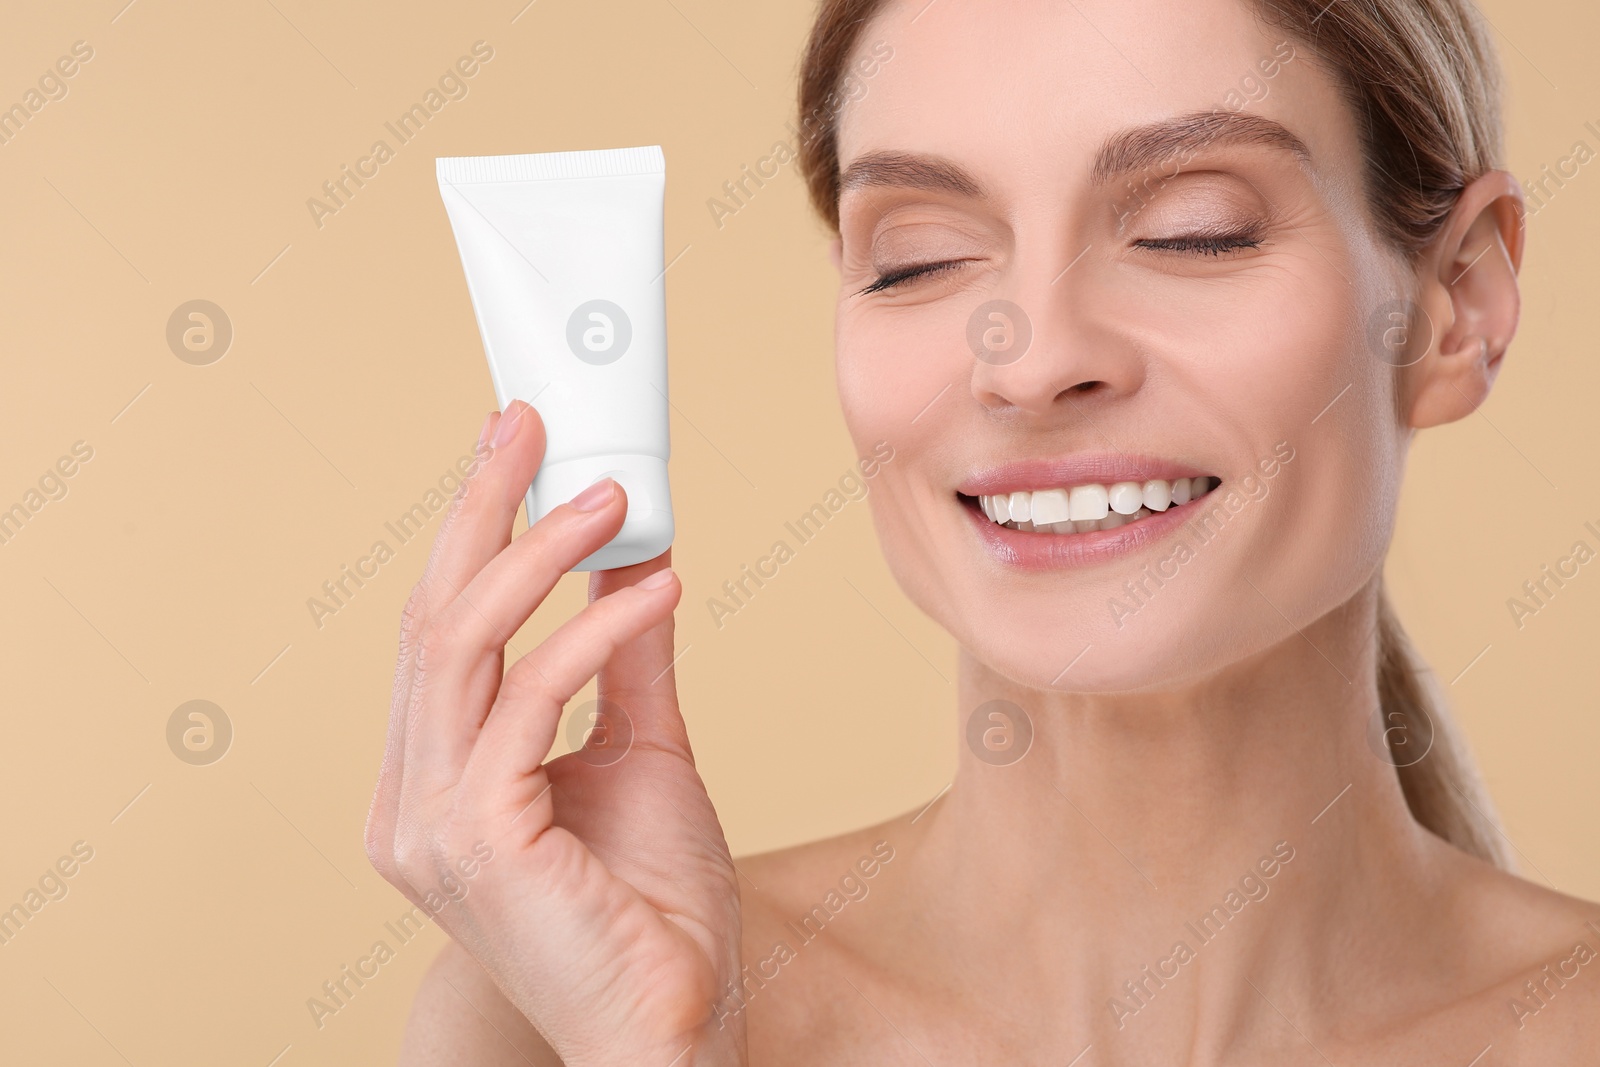 Photo of Woman holding tube of foundation on beige background